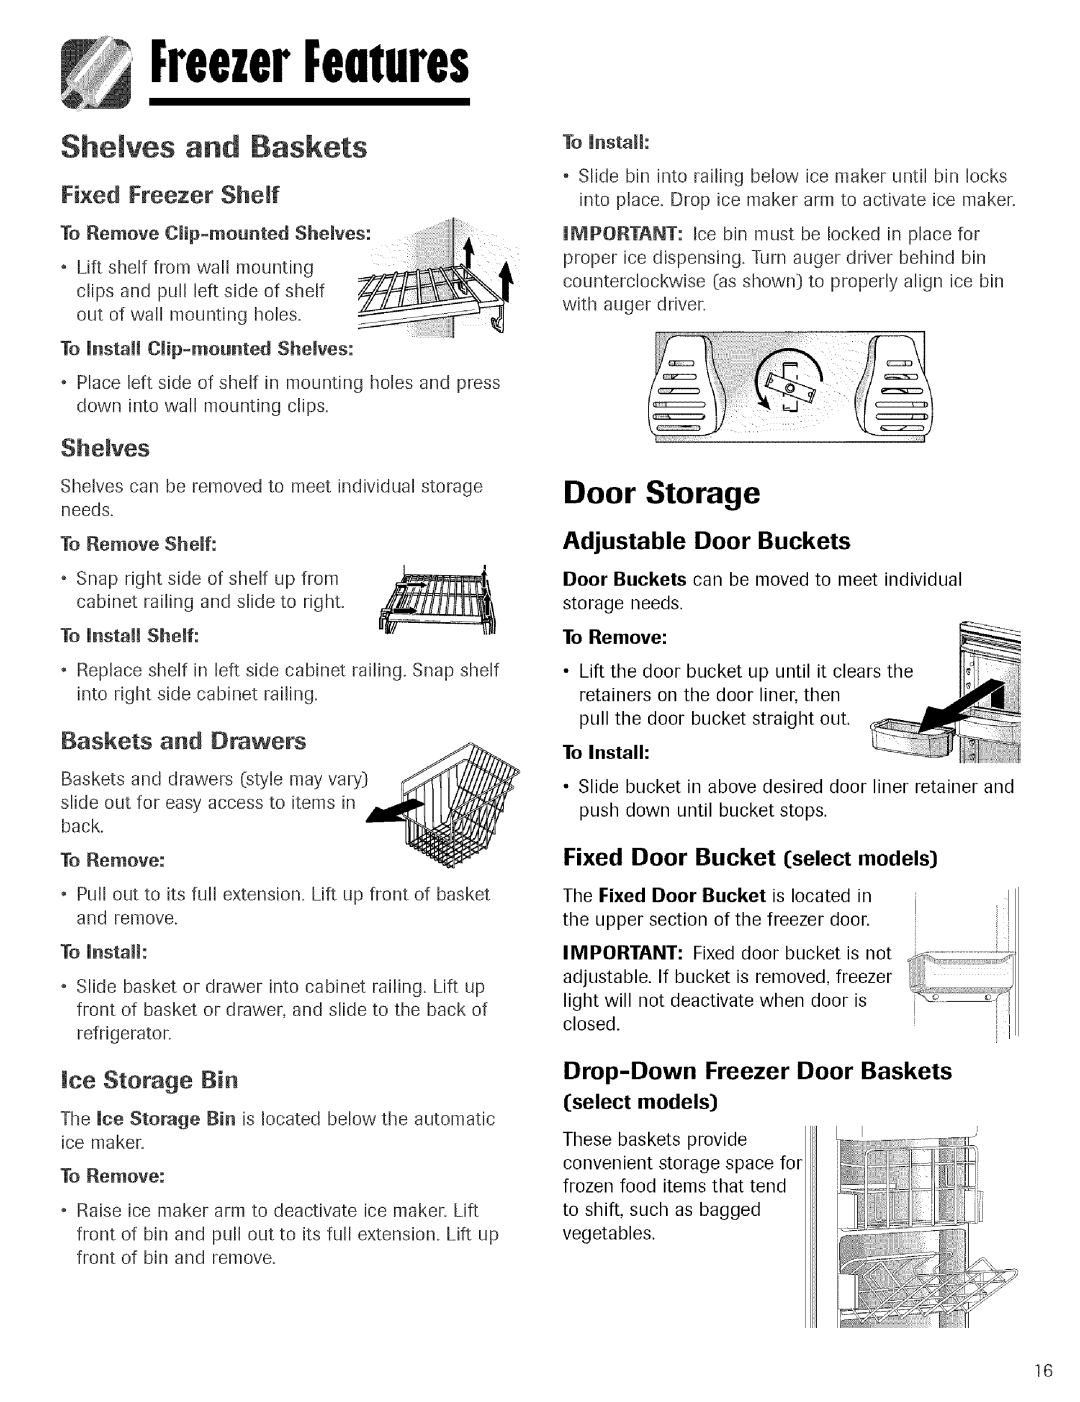 Maytag Refrigerator Door Storage, Shelves, Fixed, Freezer, Shelf, Baskets and Drawers, Adjustable Door Buckets, gaskets 